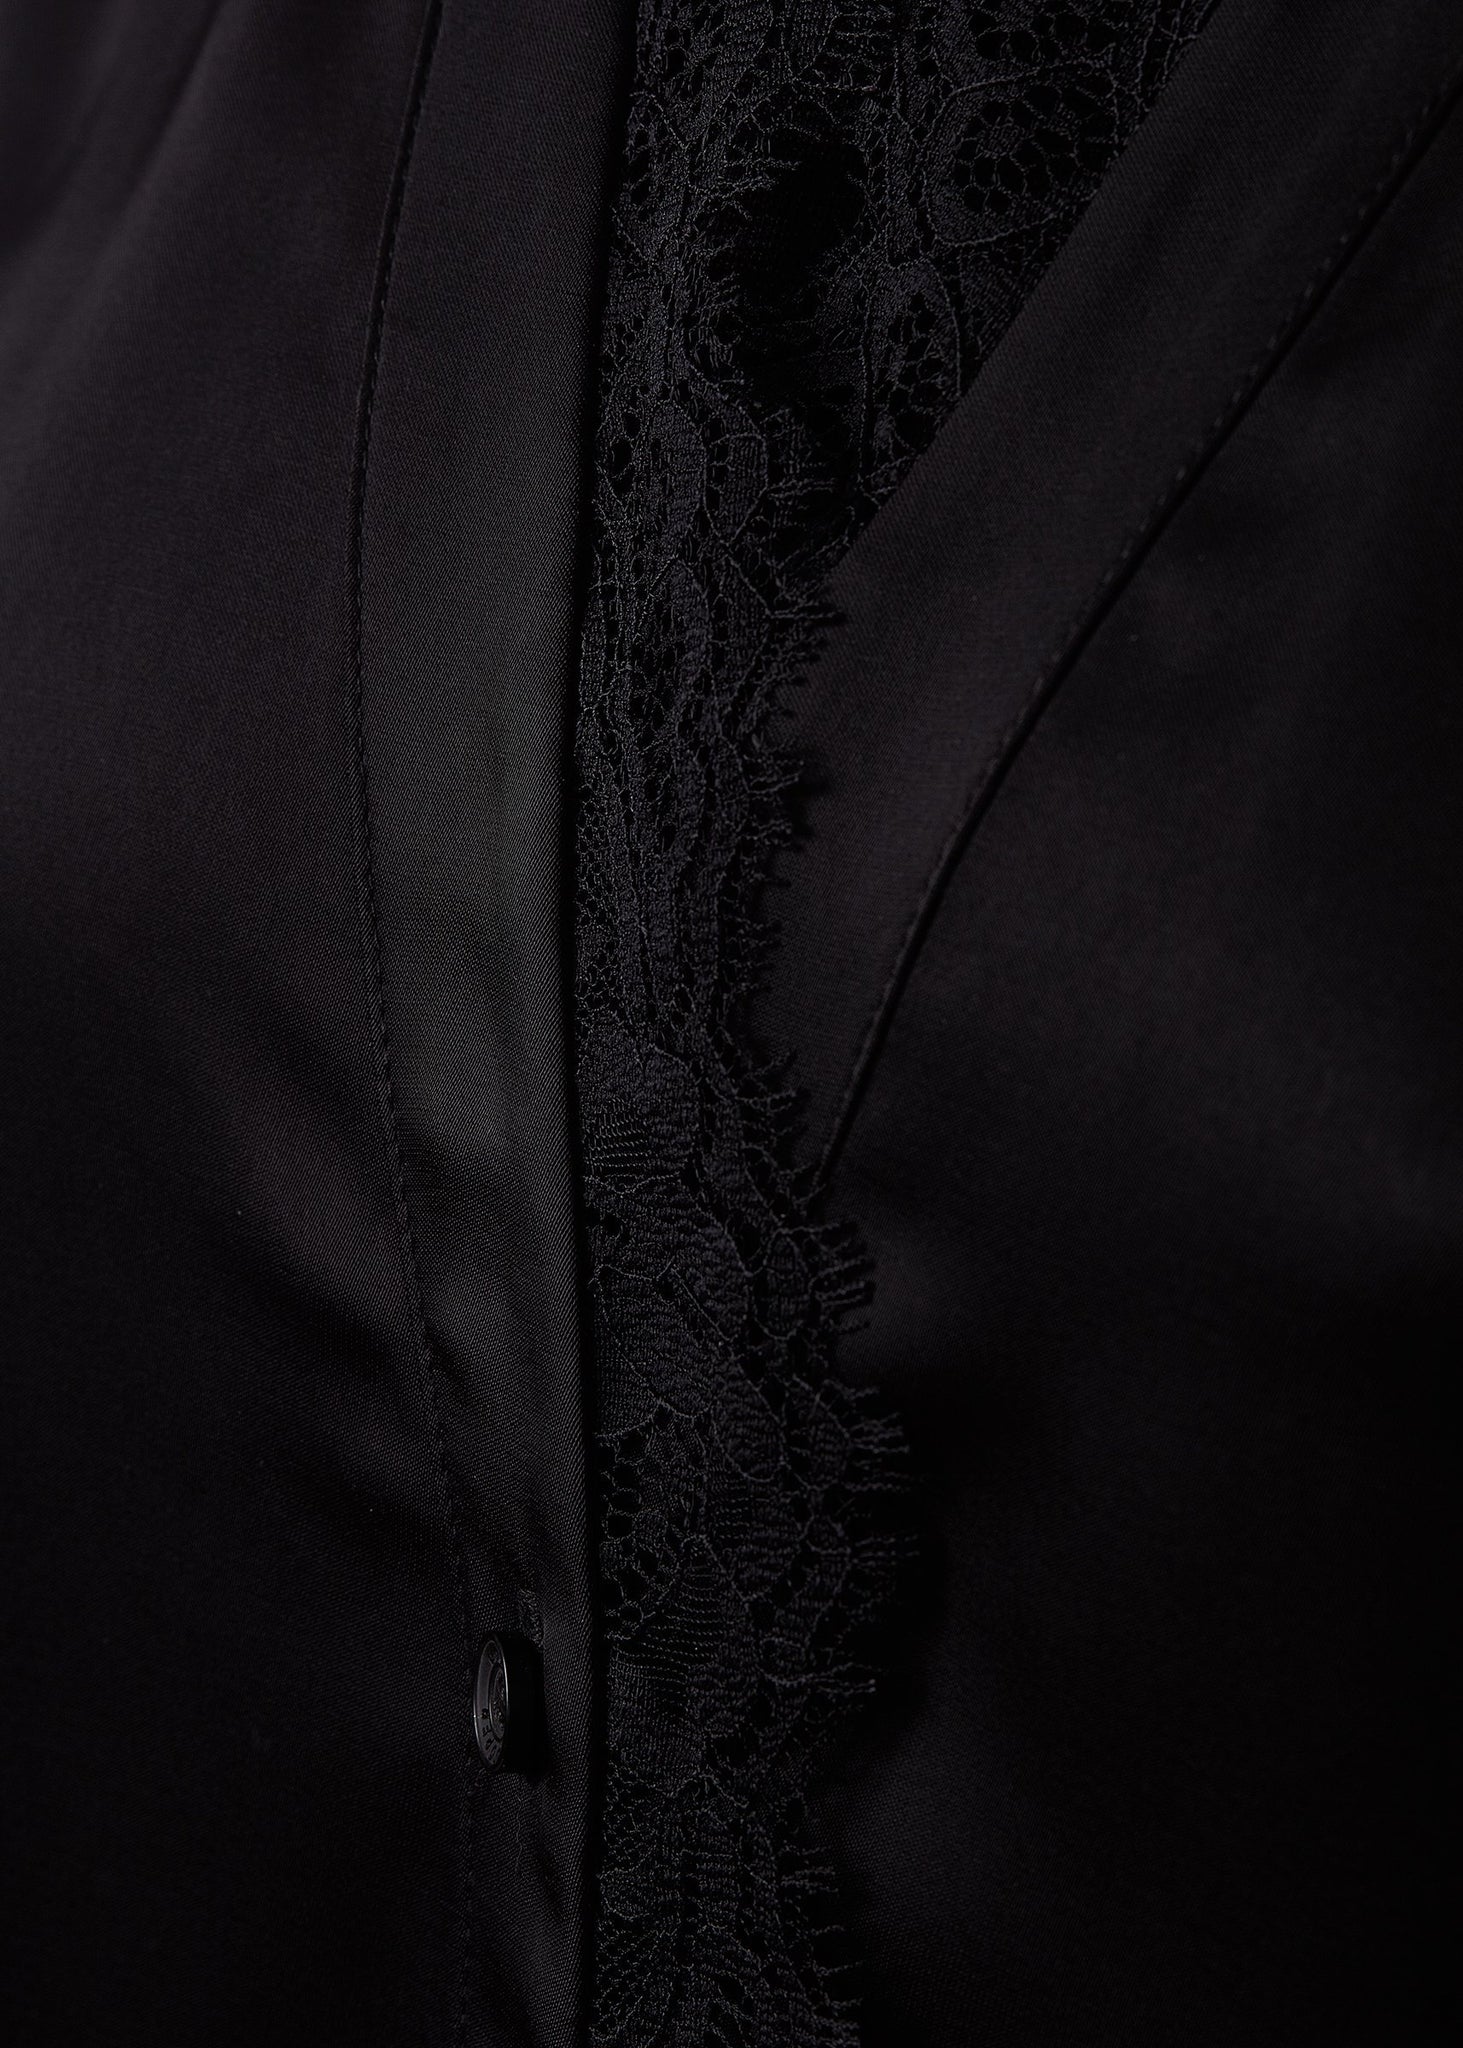 lace detail on womens black long sleeve silk v neck blouse with black lace hem details